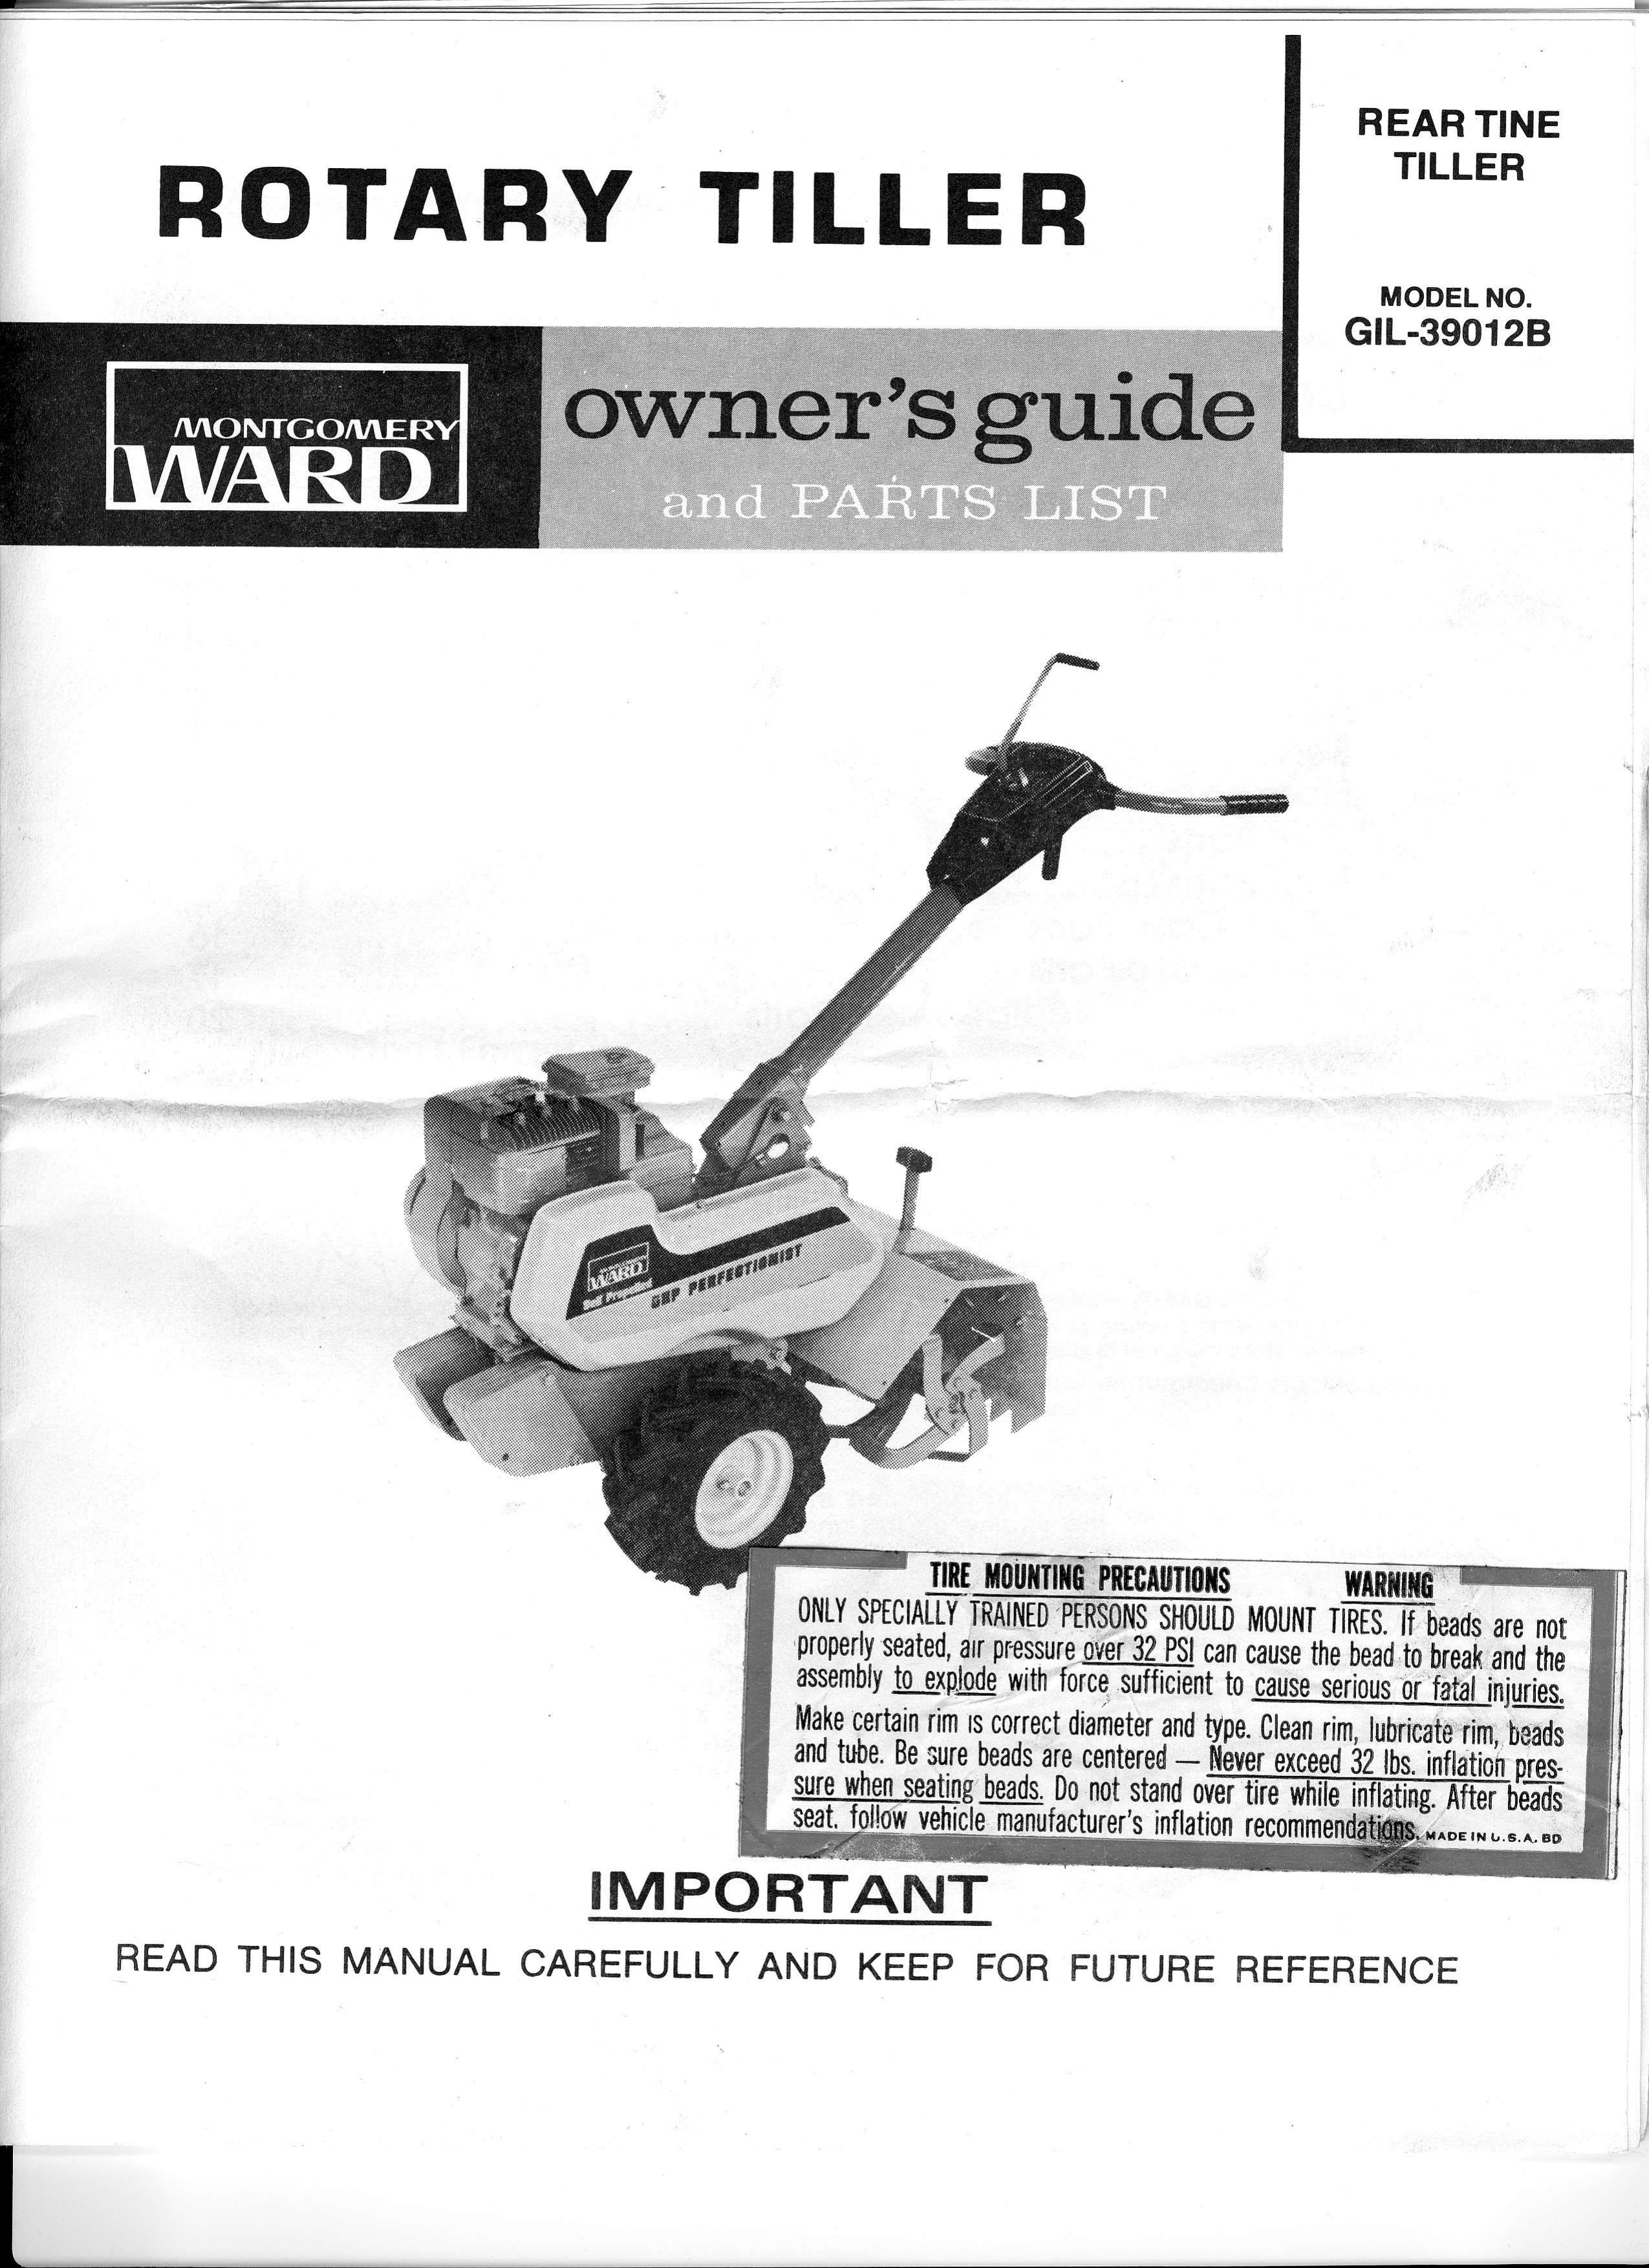 Ward's GIL-39012B Tiller User Manual